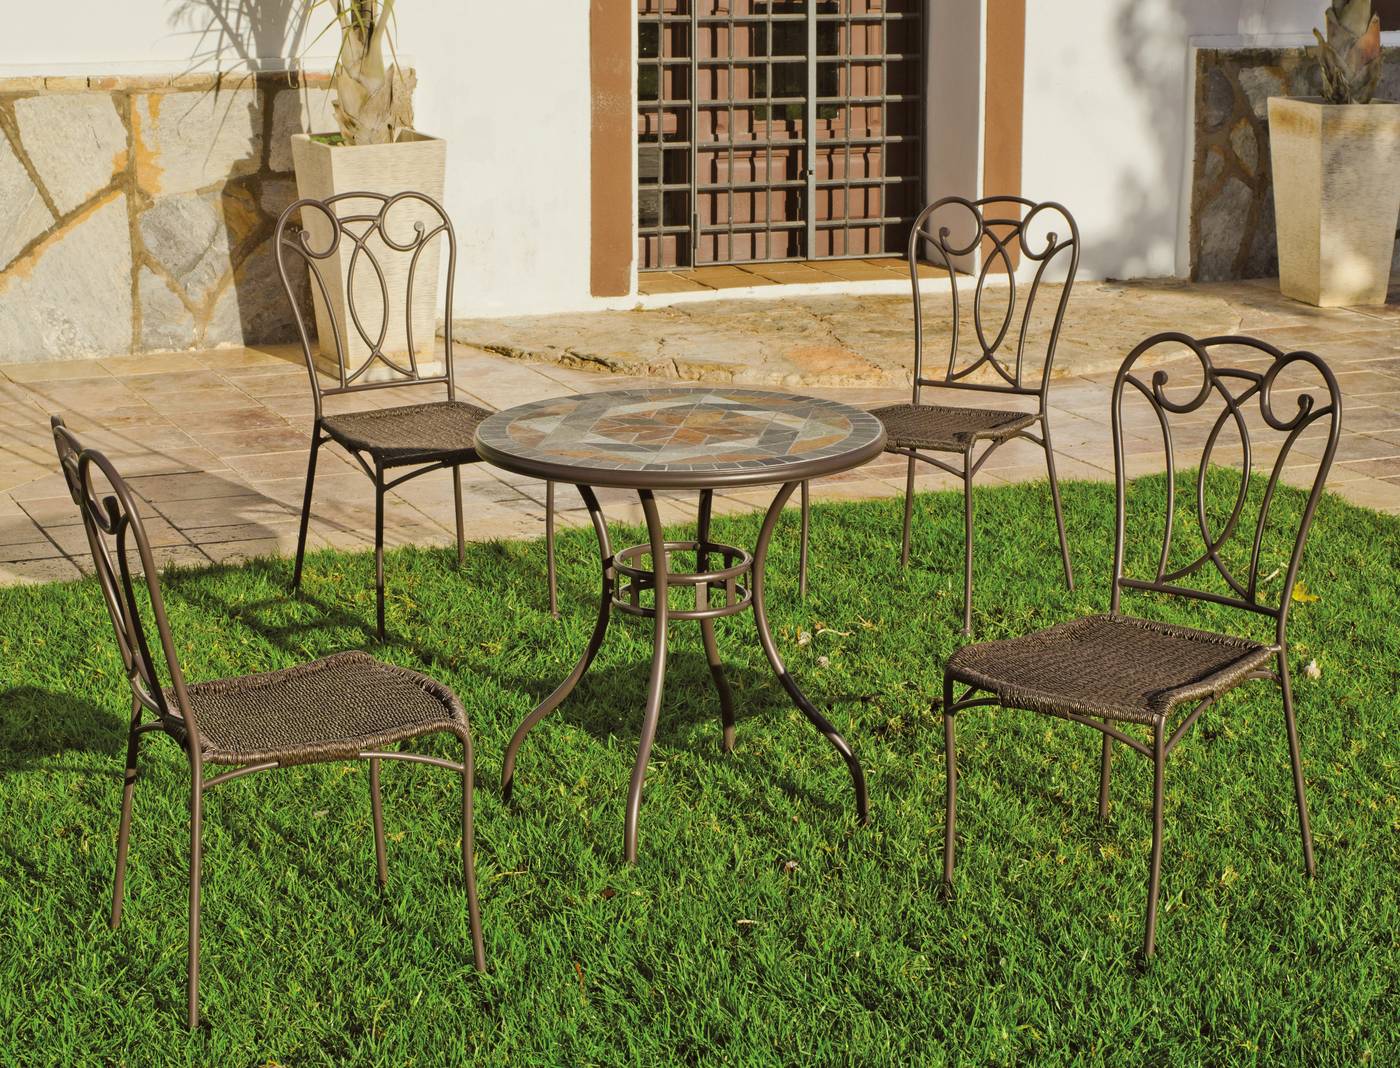 Conjunto de forja de lujo: mesa con tablero mosaico de piedra + 4 sillas de forja apilables